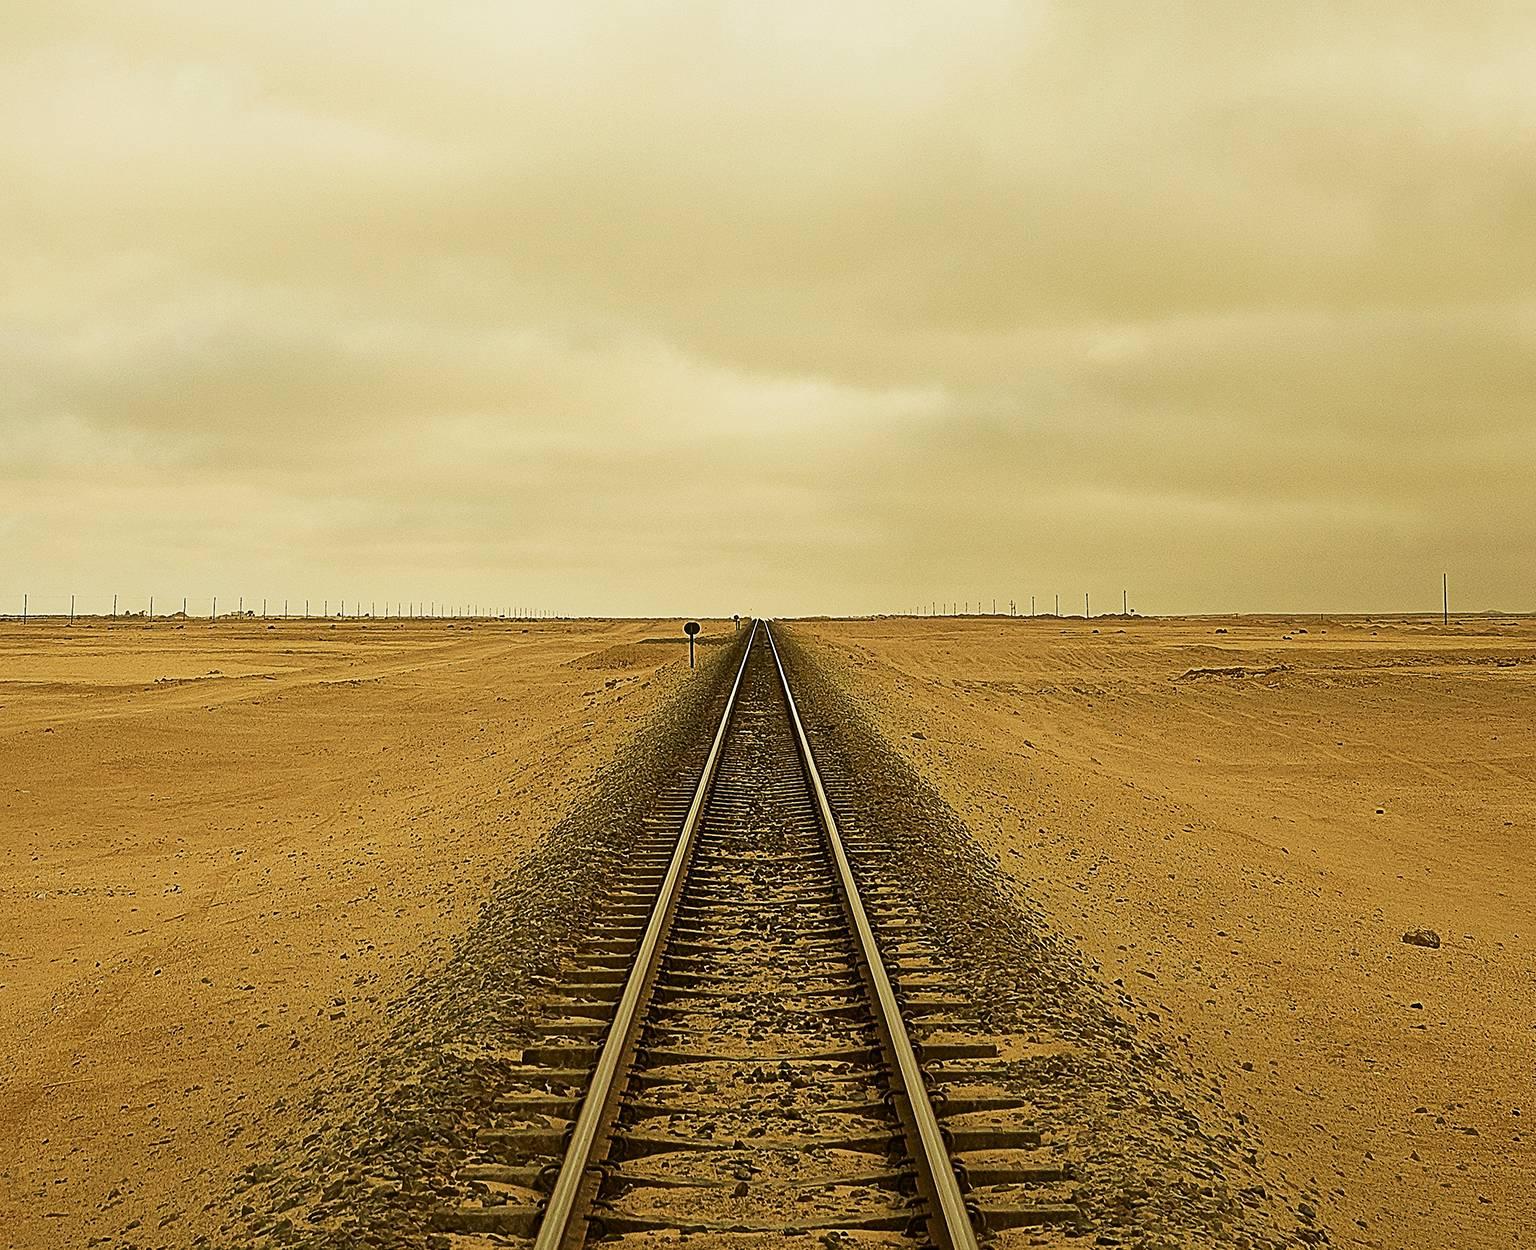 Namibia Railroad 02 - Photograph by Chris Gordaneer